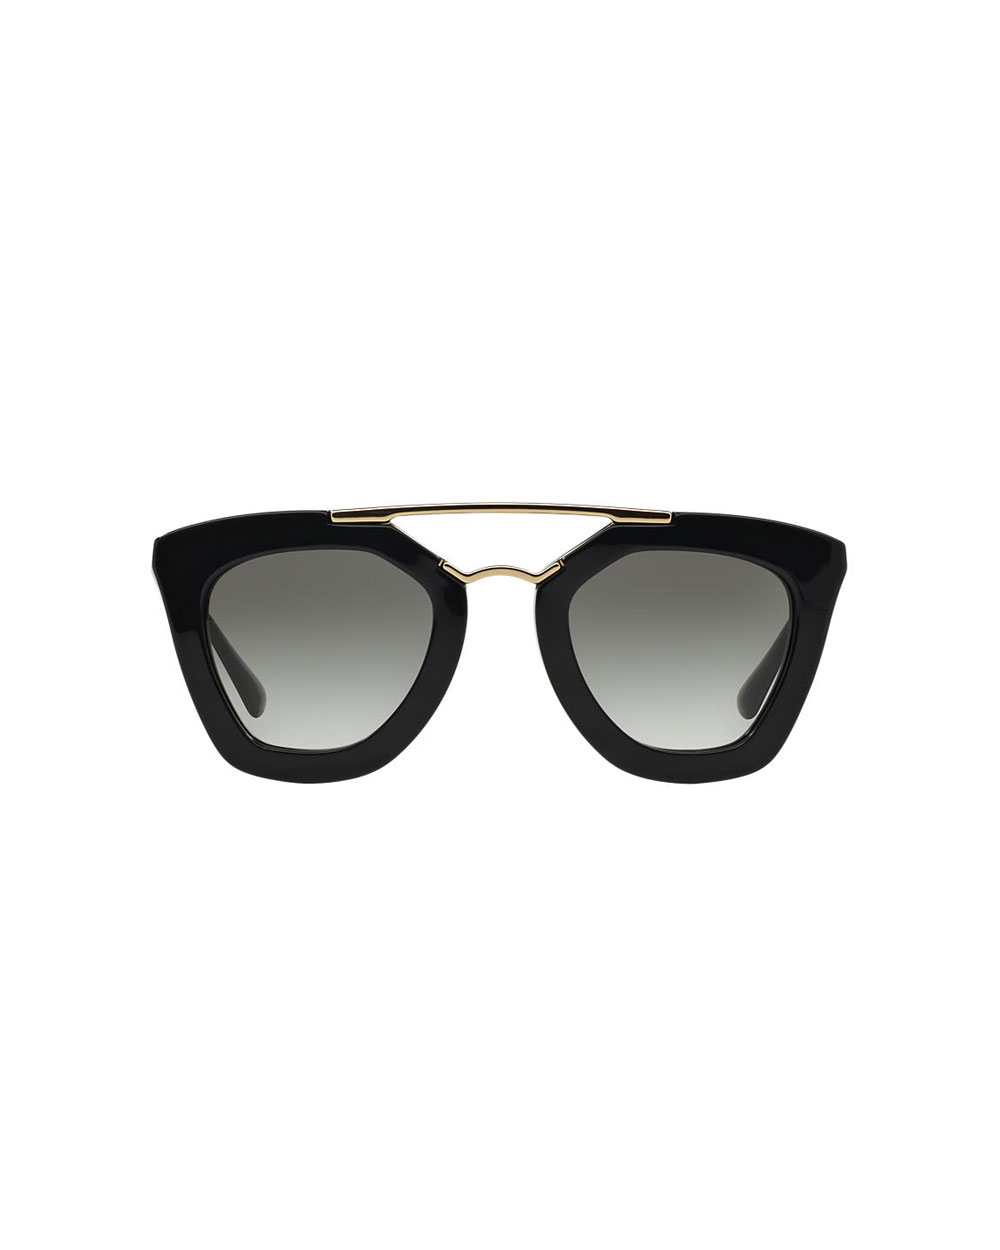 Prada sunglasses from Sunglass Hut